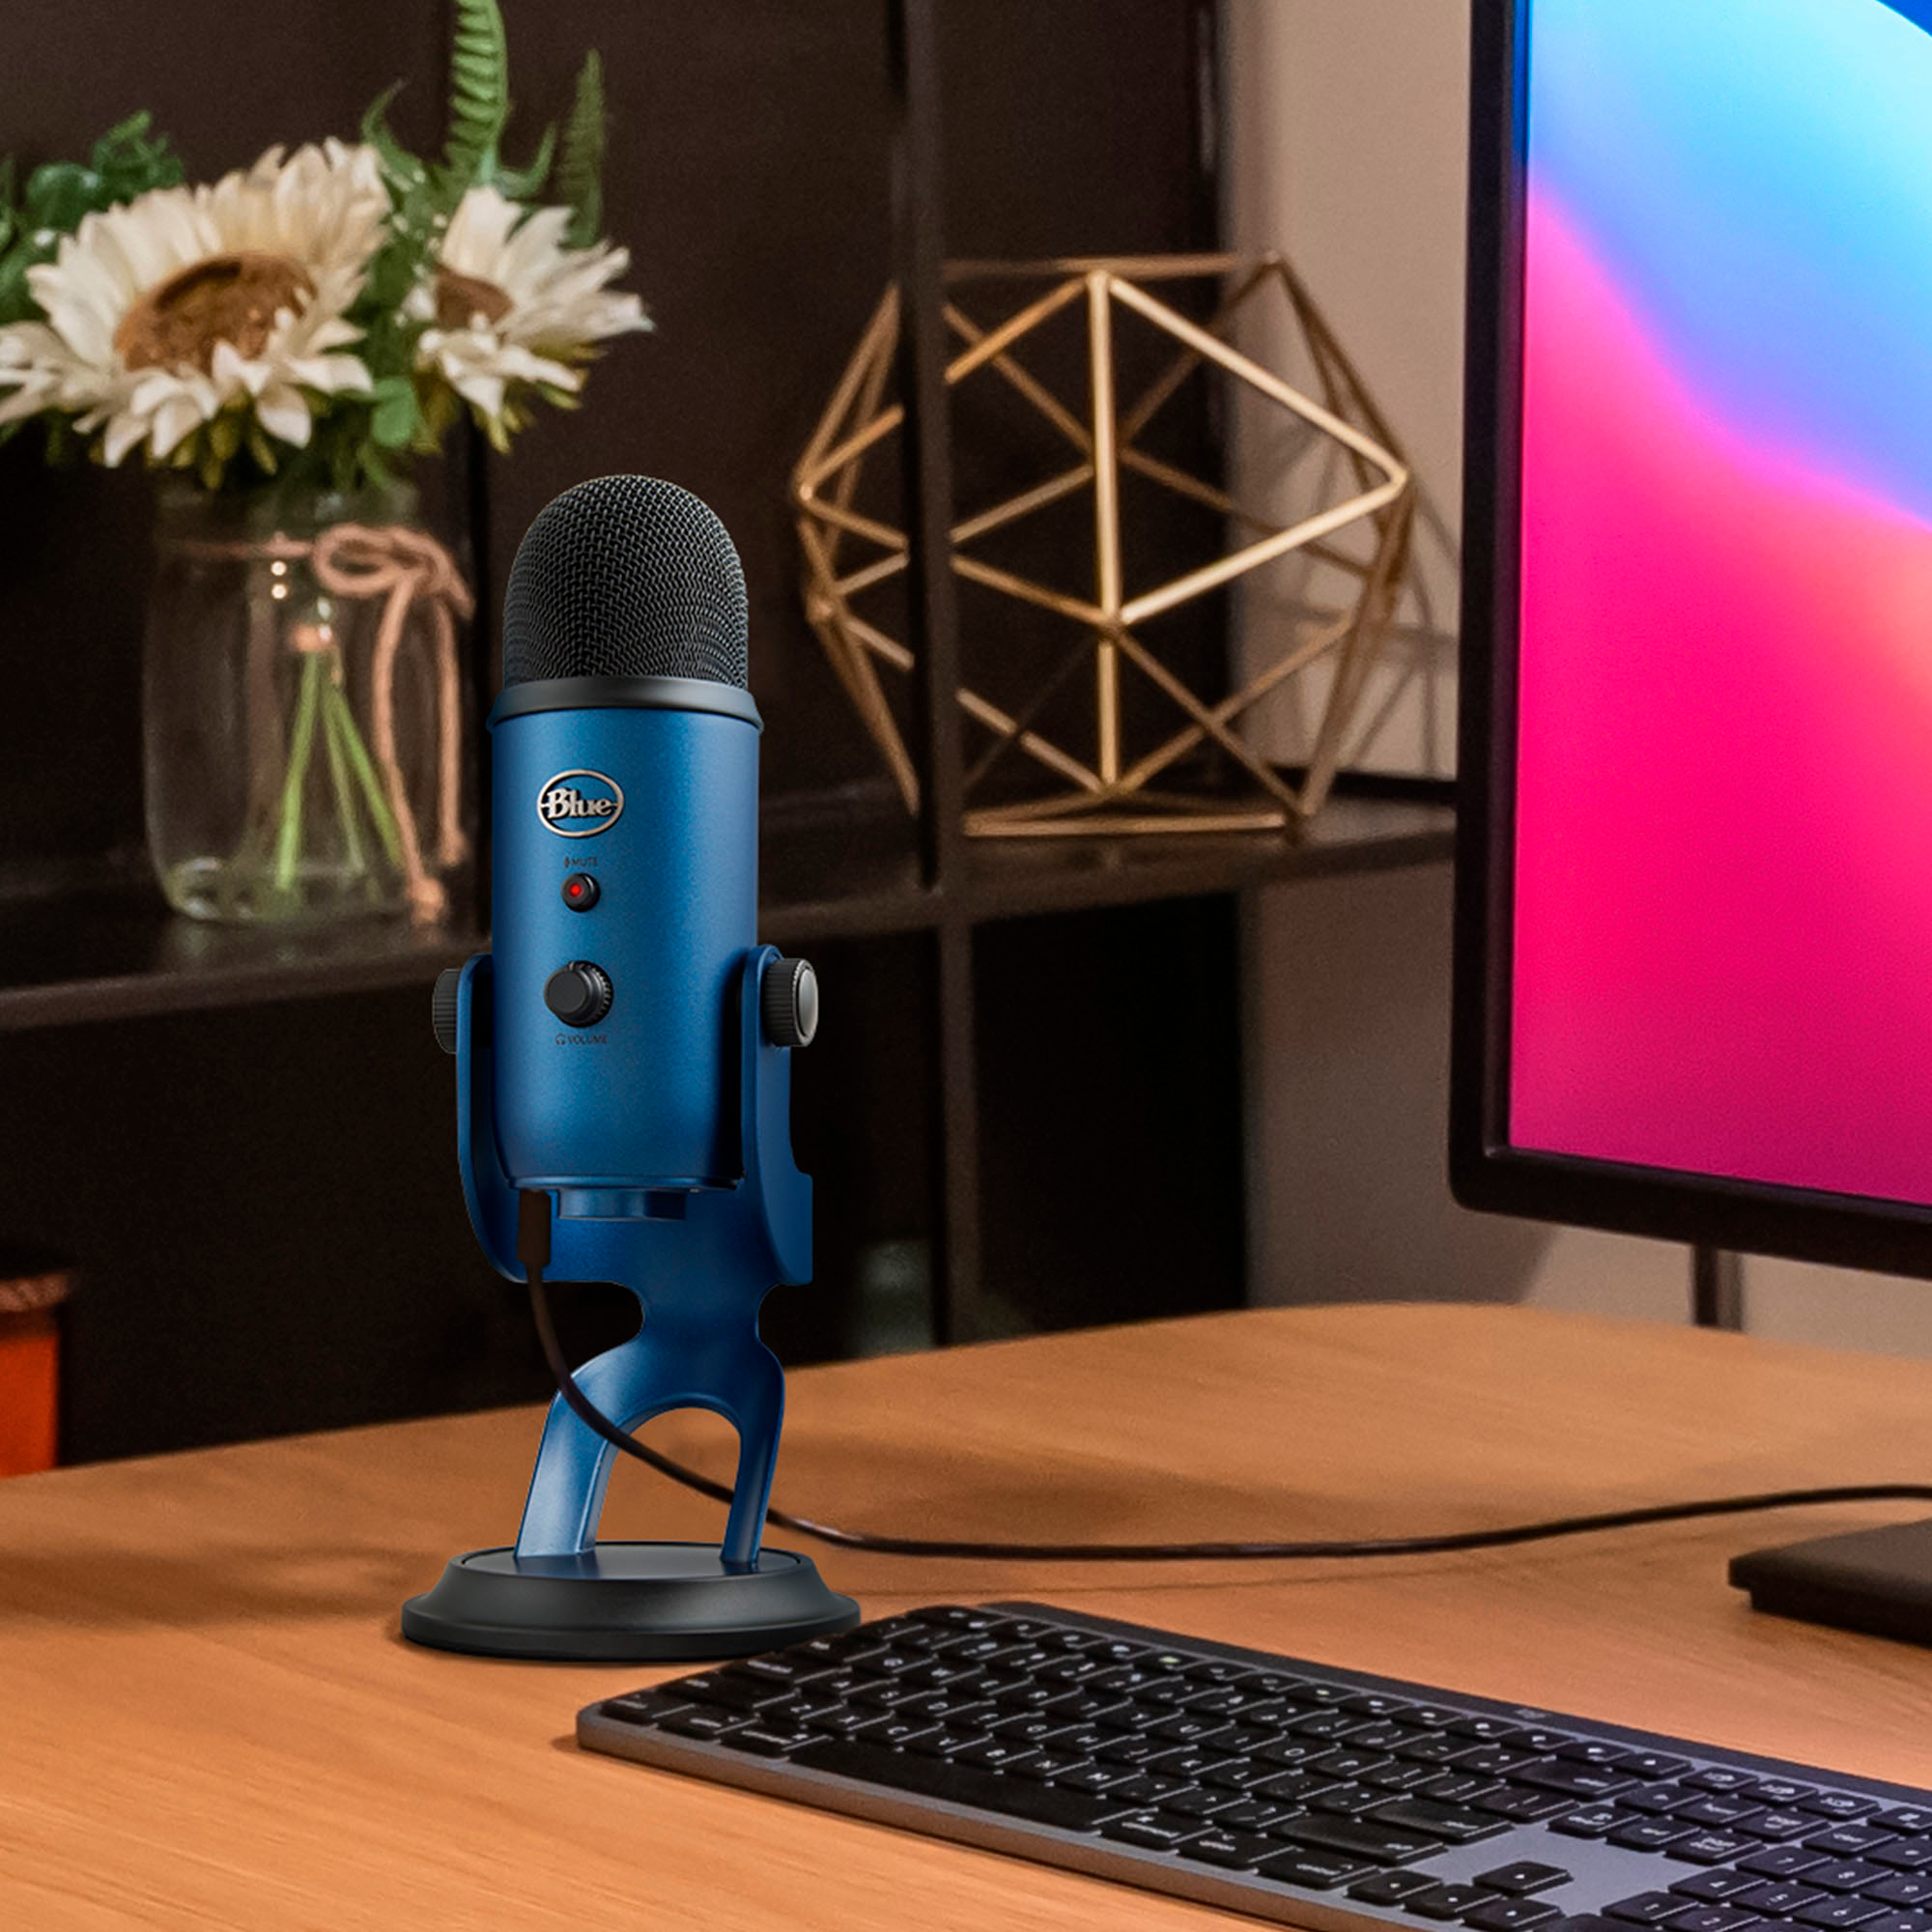 Yeti Premium Multi-Pattern USB Microphone with Blue VO!CE